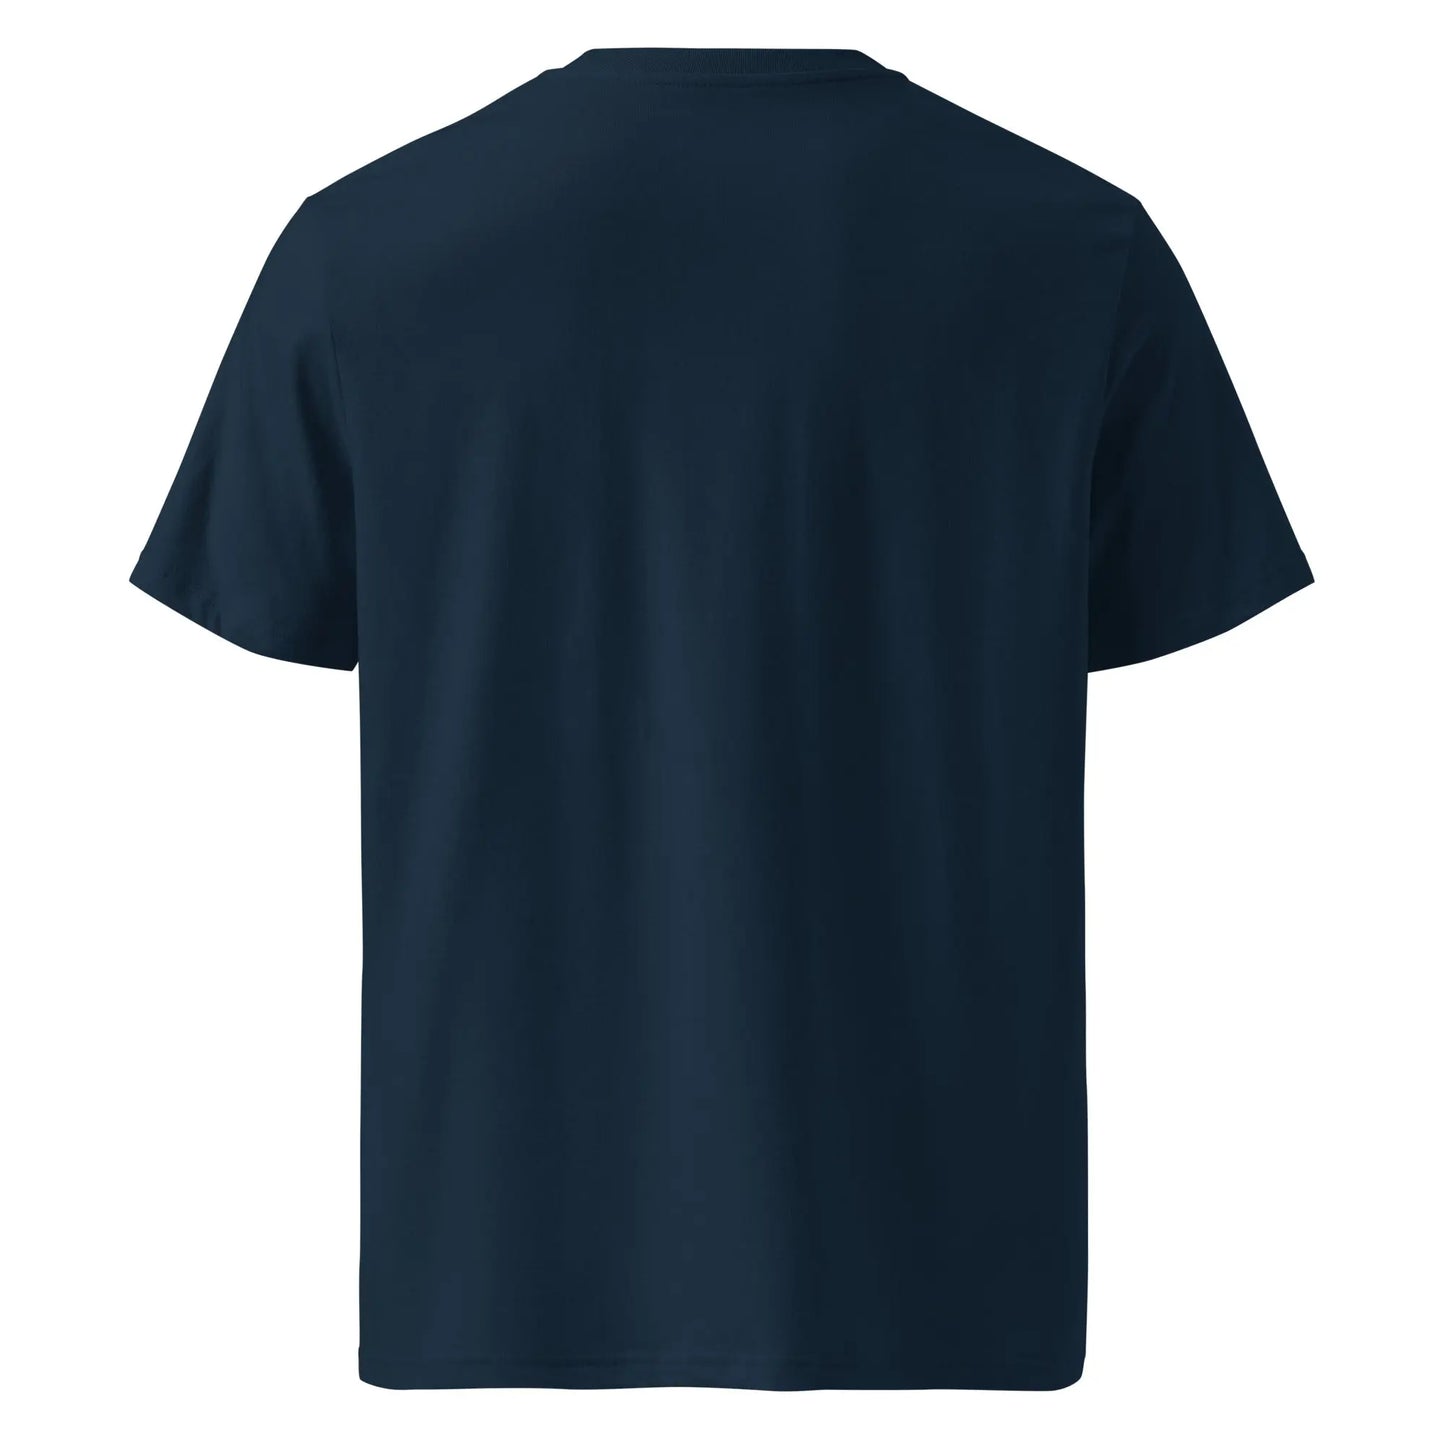 Bitcoin Bull Run - Embroidered - Premium Unisex Organic Cotton Bitcoin T-shirt Store of Value